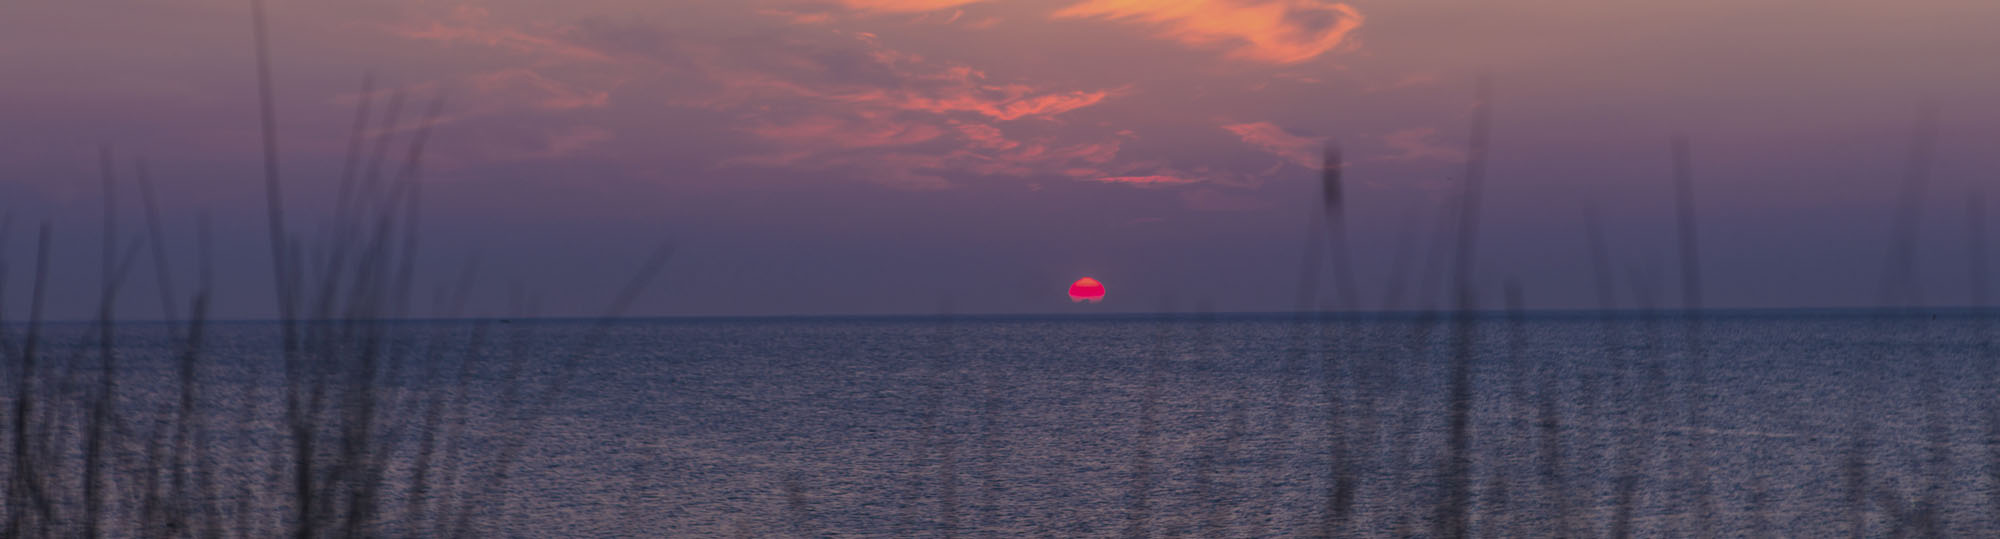 Sonnenaufgang Travemünde Ostsee